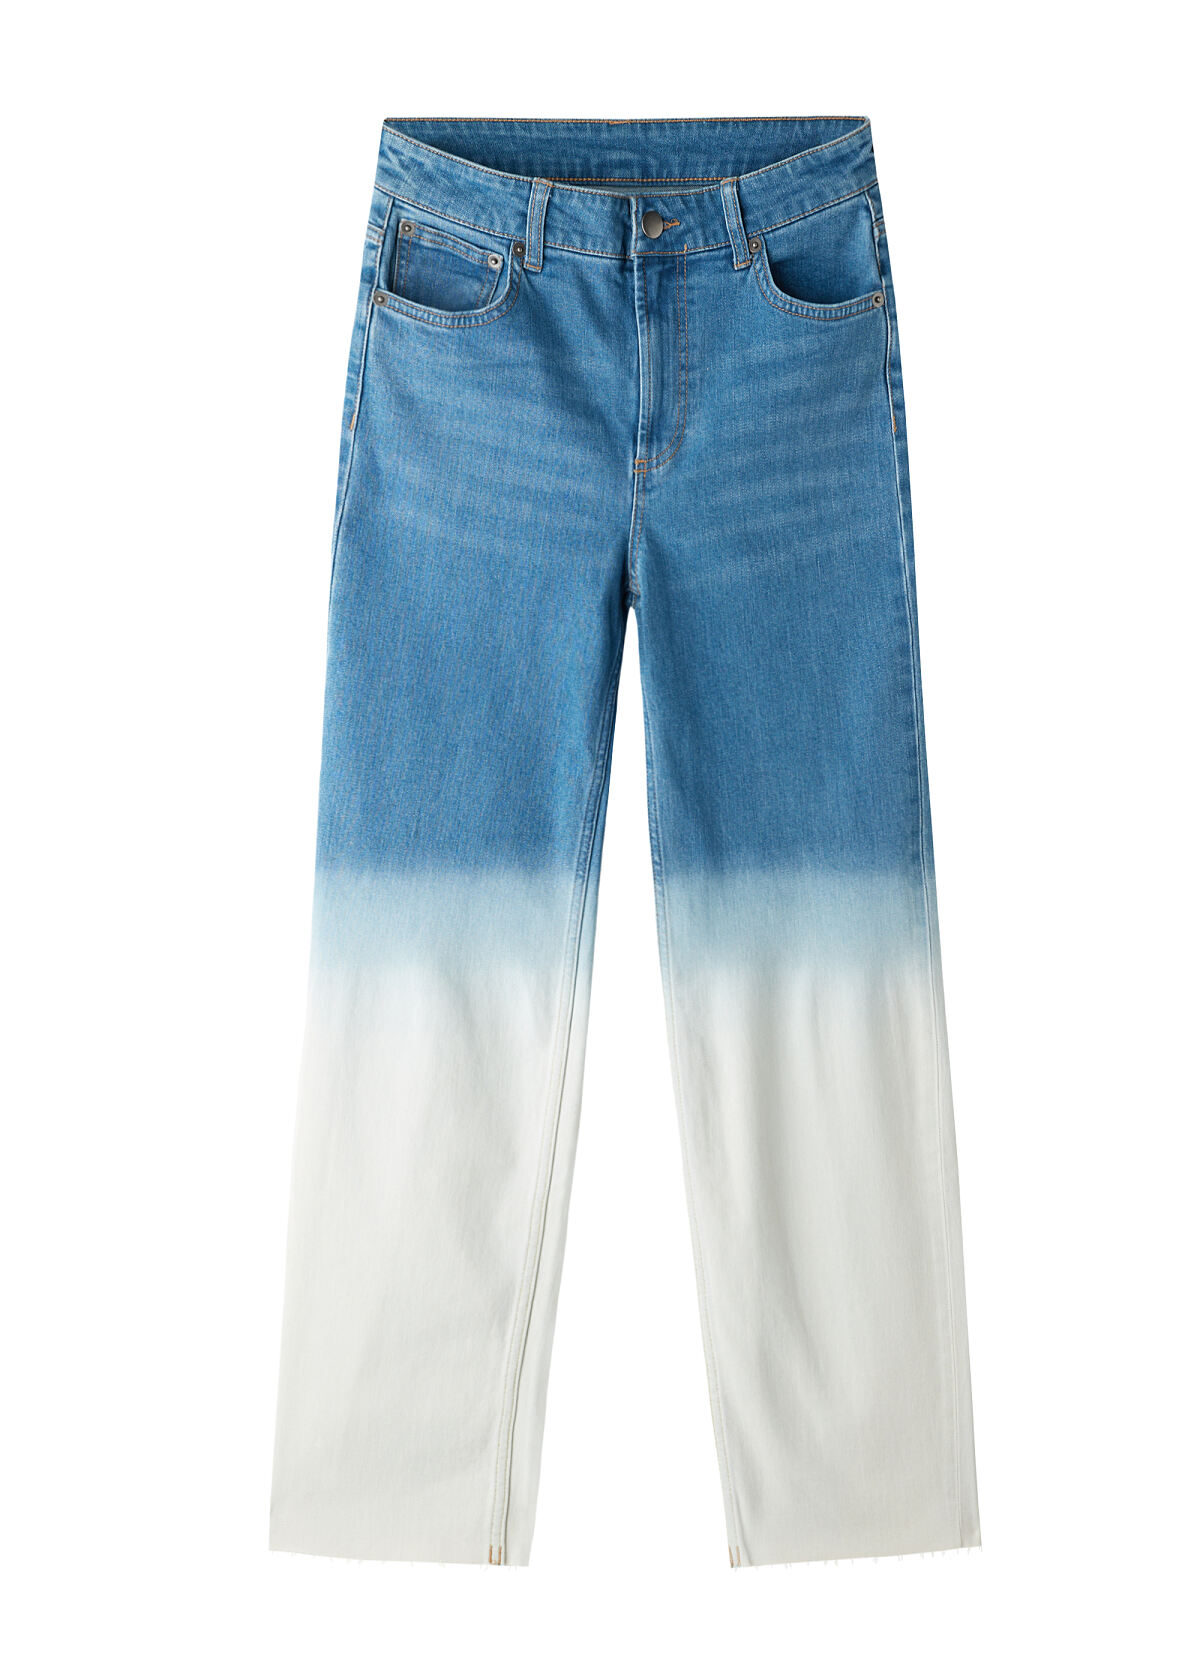 CLZ_Nuancierte Straight-Fit Jeans im Cropped-Schnitt_39_95